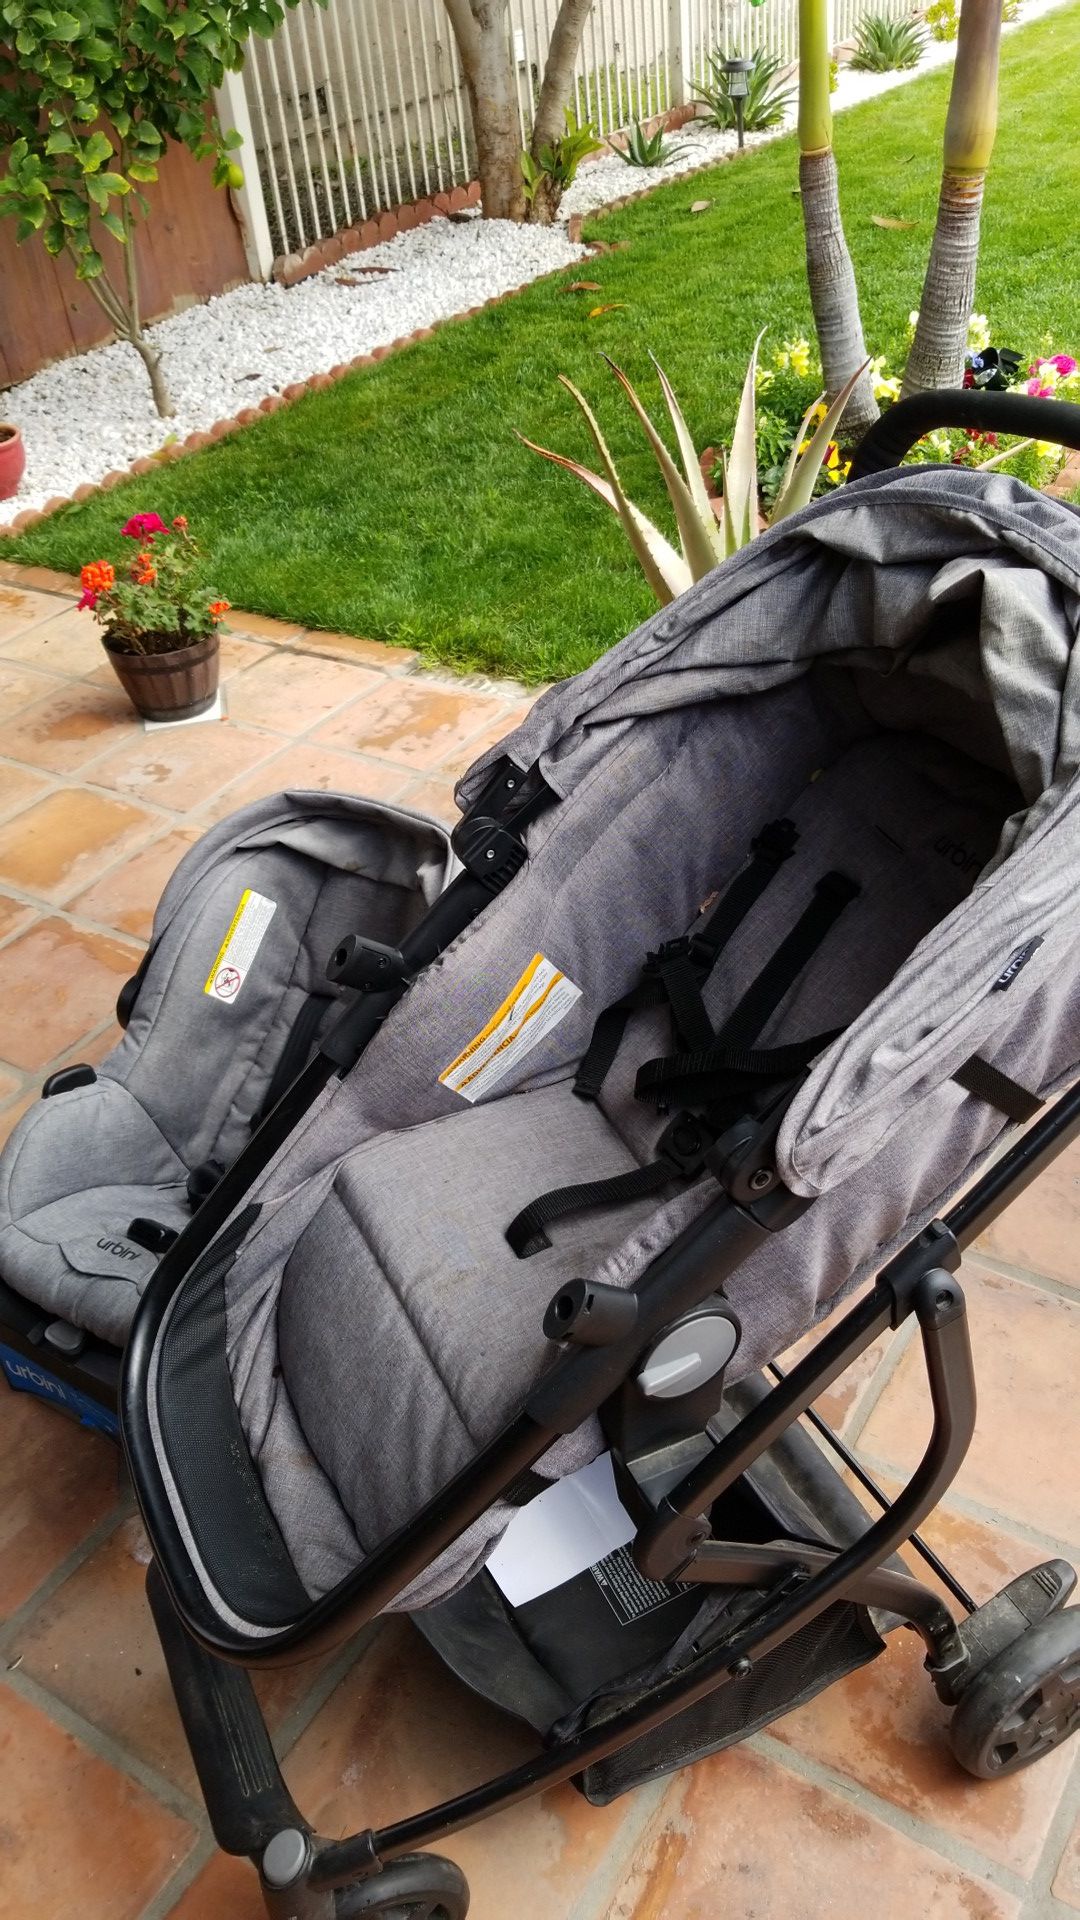 Baby car seat & stroller